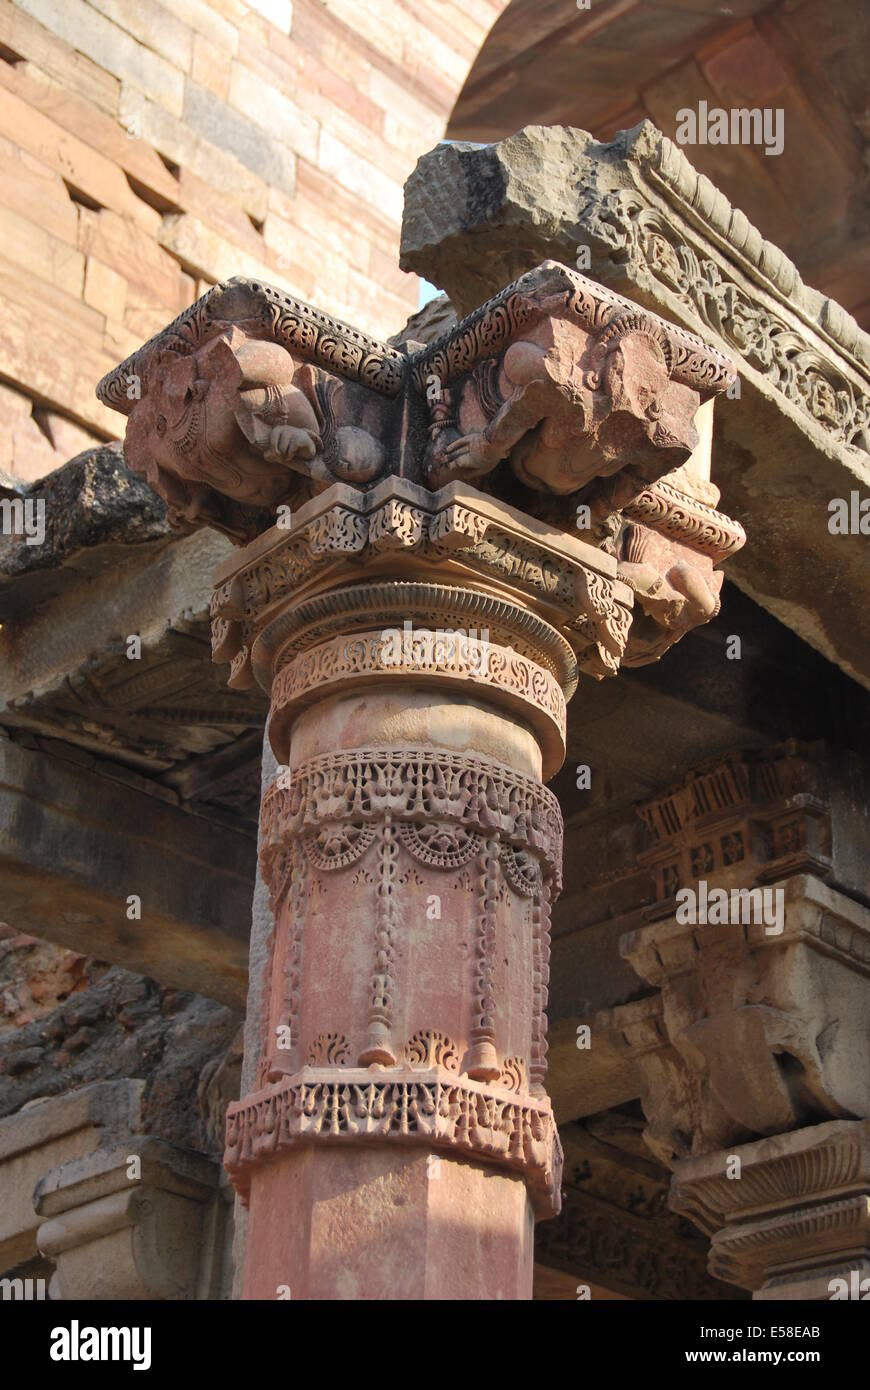 Qutab Minar Mosque, Delhi, India.  The mosque with Hindu ornamentation stolen from Hindu temples. Stock Photo